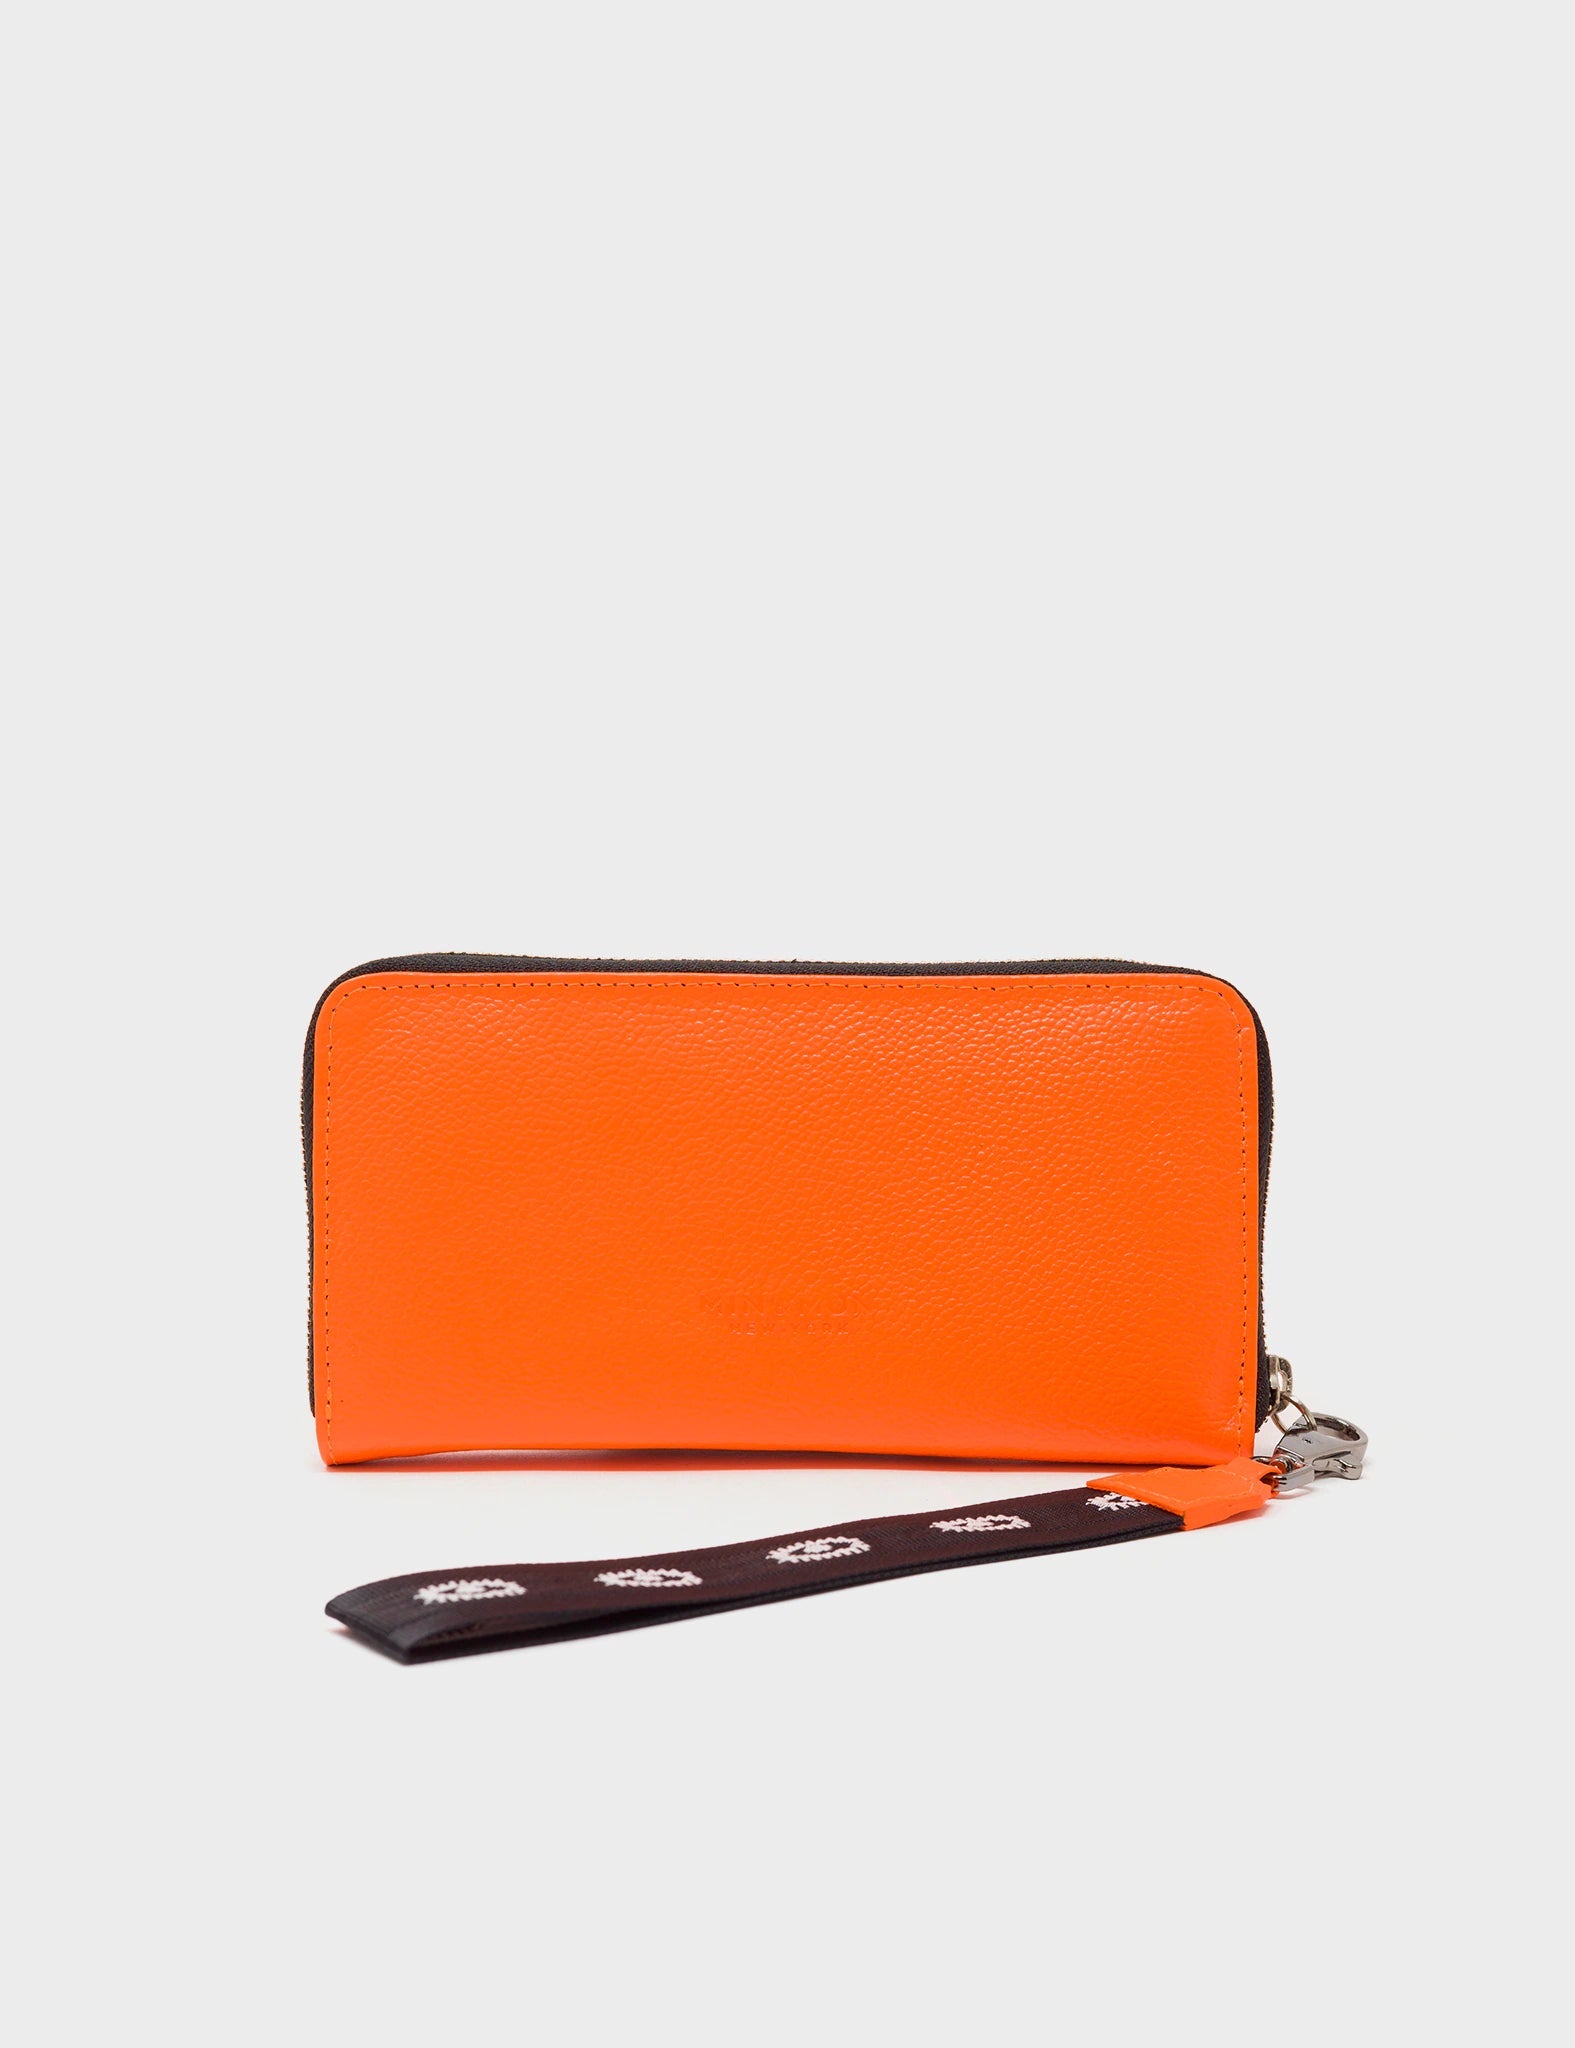 Minimalist Square Bag Neon Orange With Coin Purse | SHEIN USA